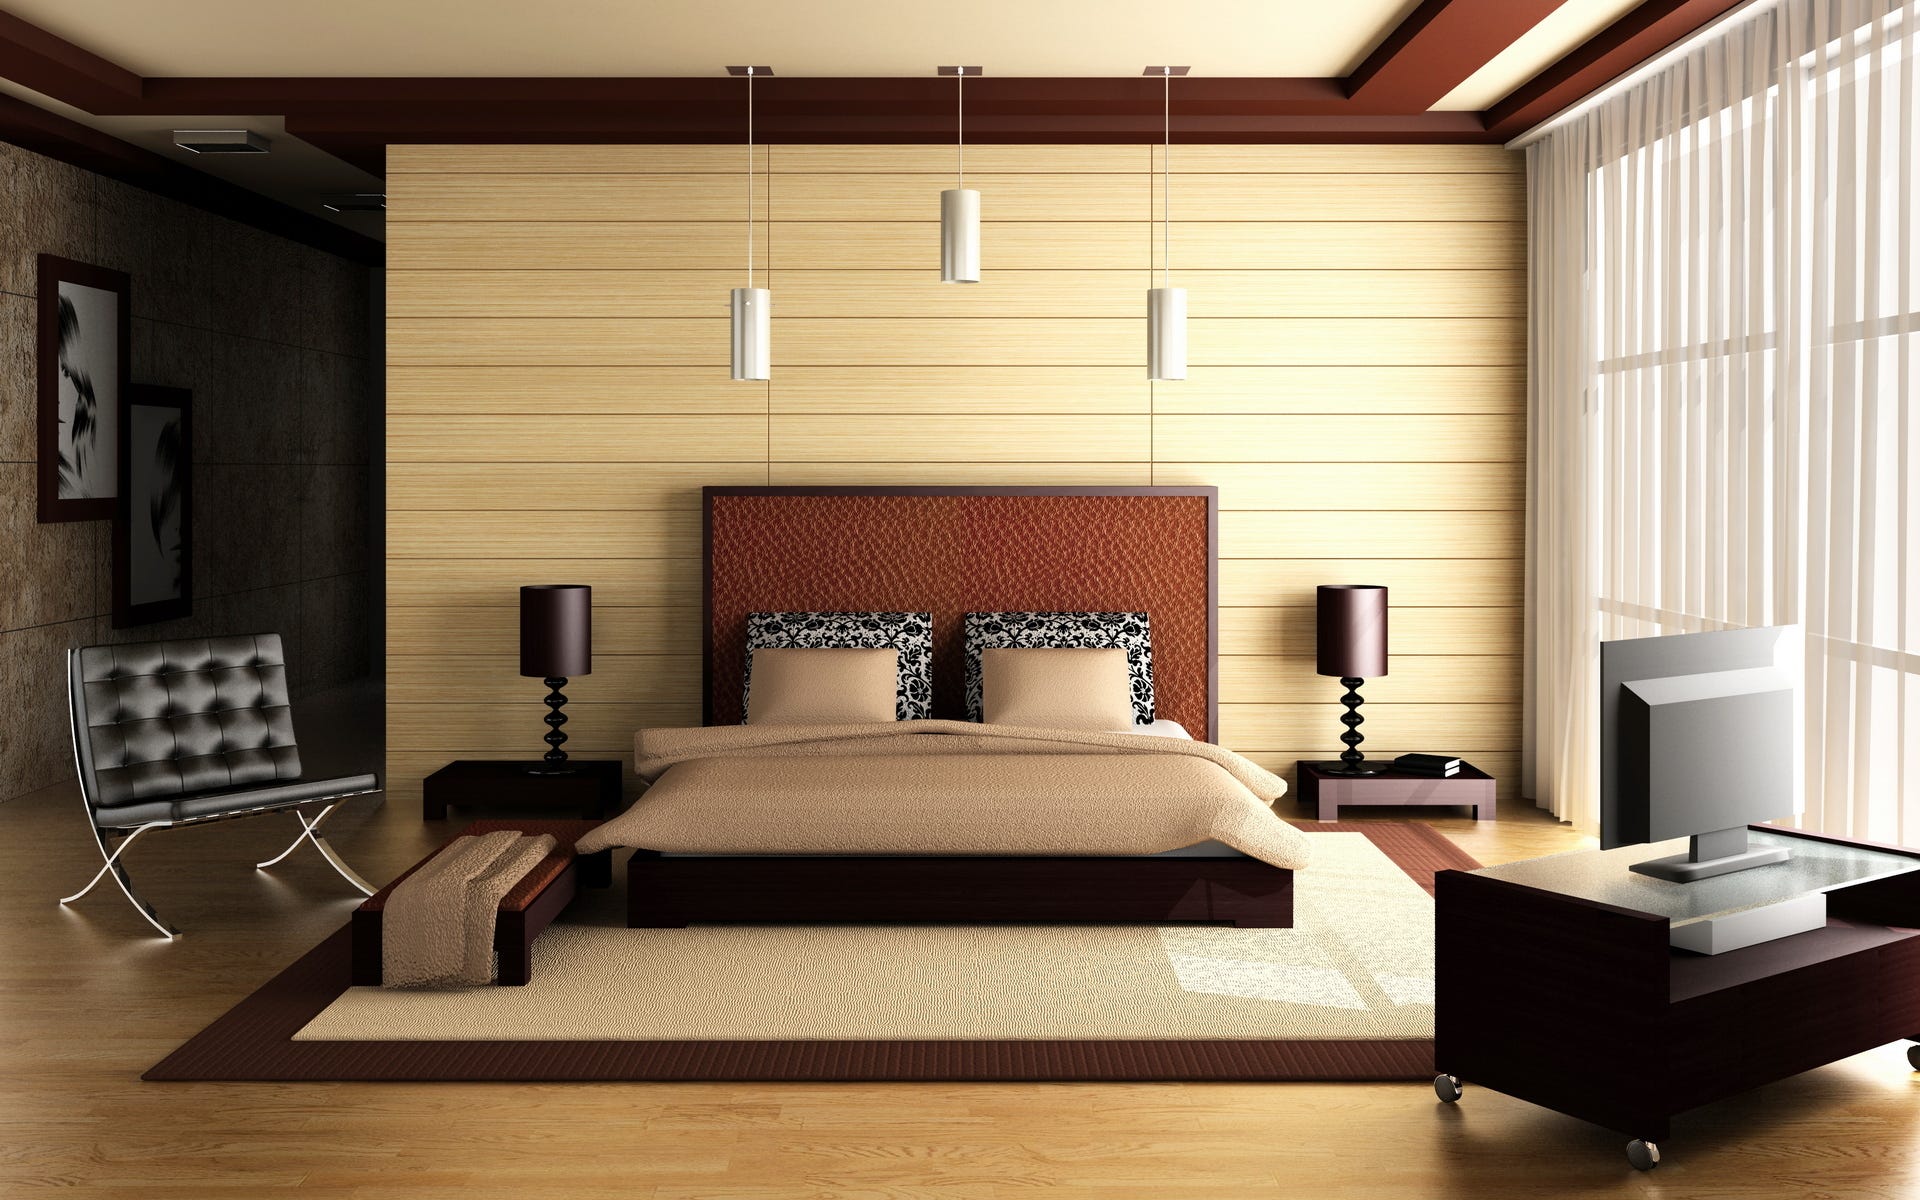 Bedroom Interior Images By Putra Sulung Medium